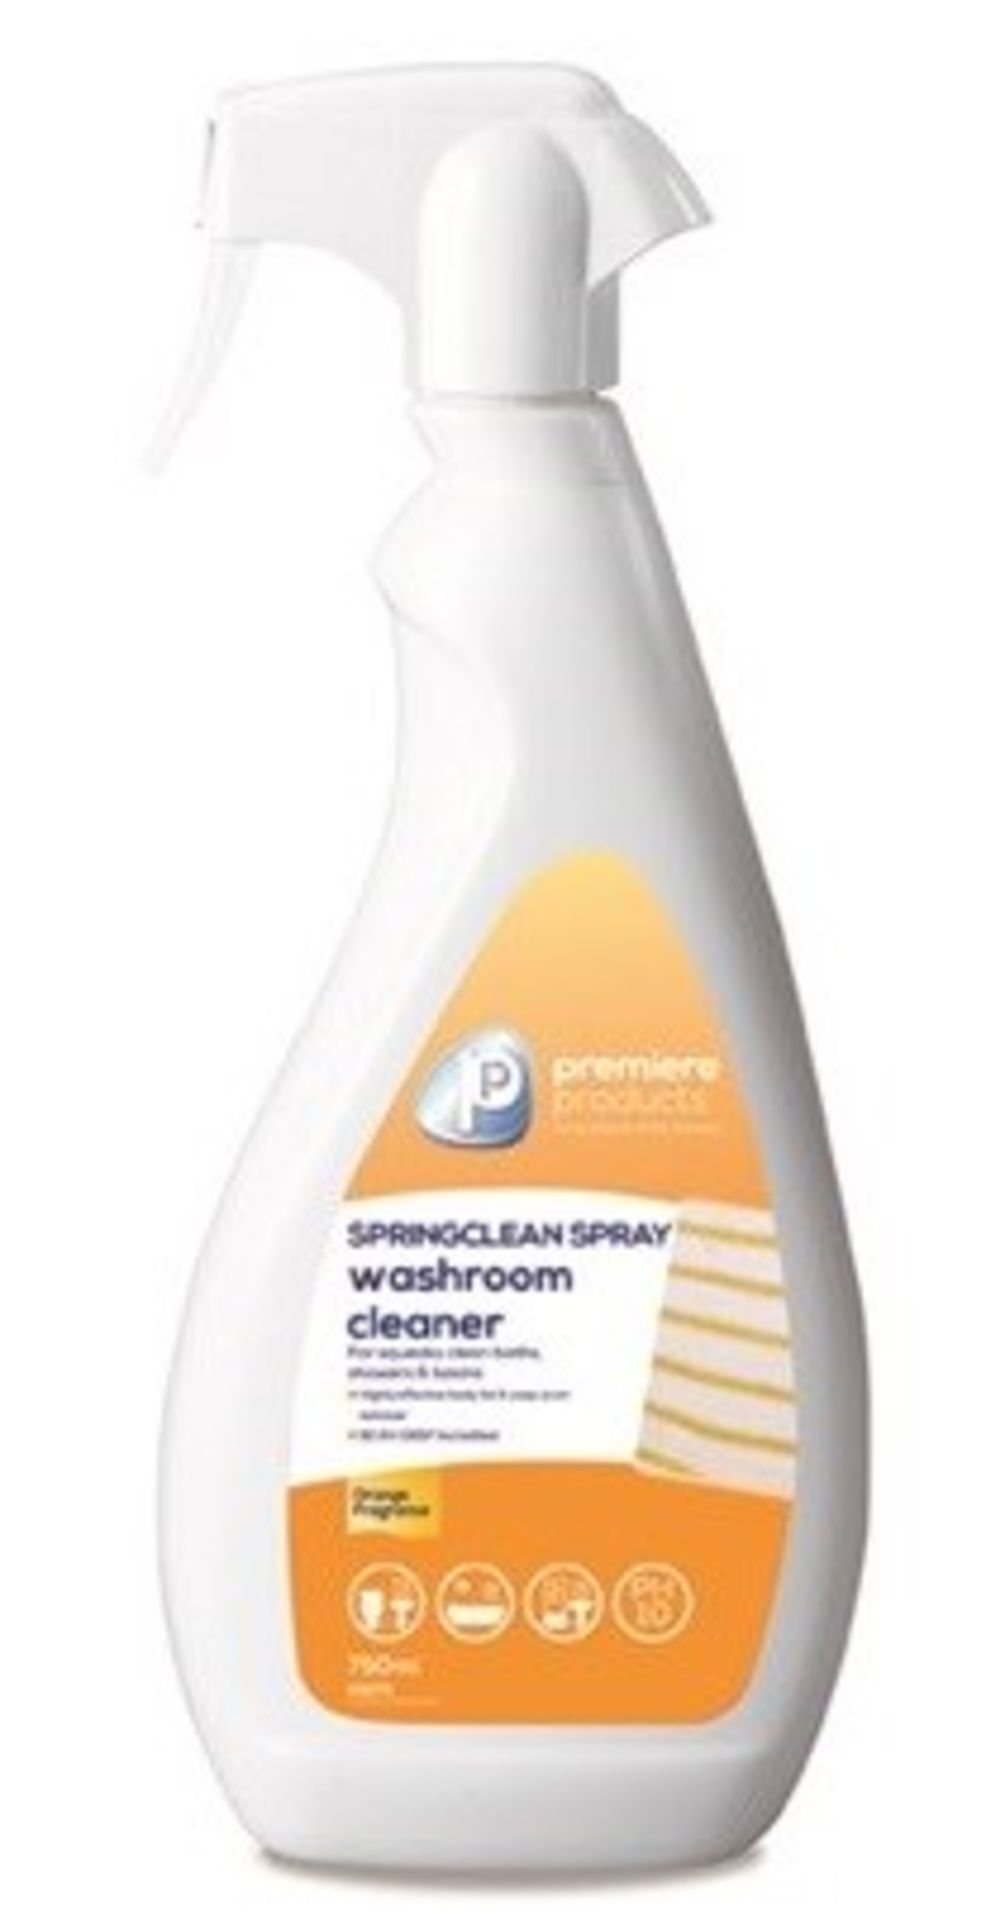 6 x 750ml Bottles Of Premiere "Springclean Spray" Commercial Washroom Cleaner - Orange Fragrance -